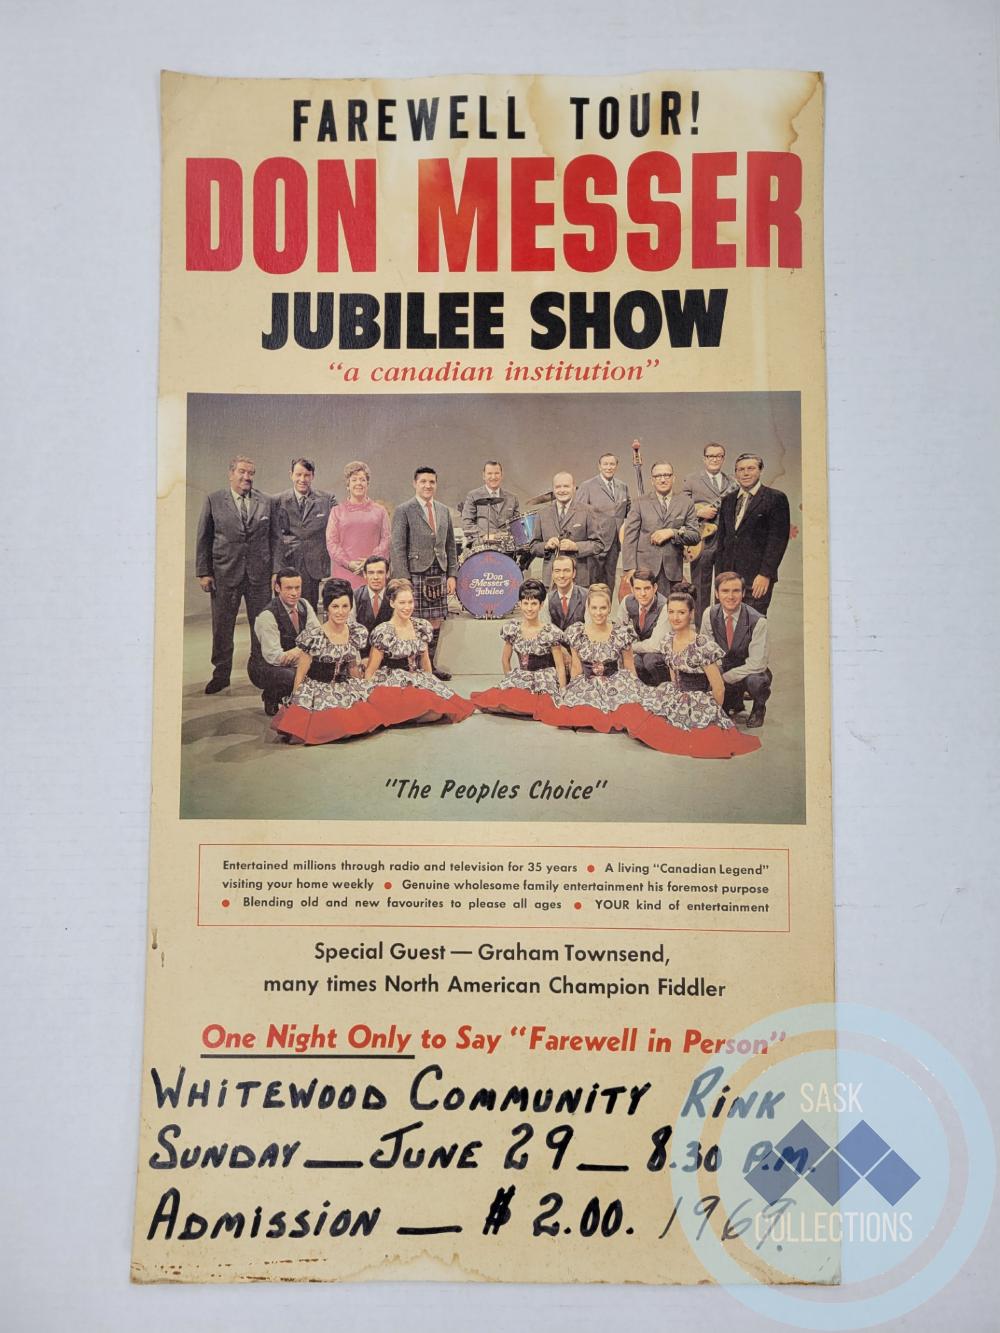 Don Messer's Farewell Tour Poster - 1969